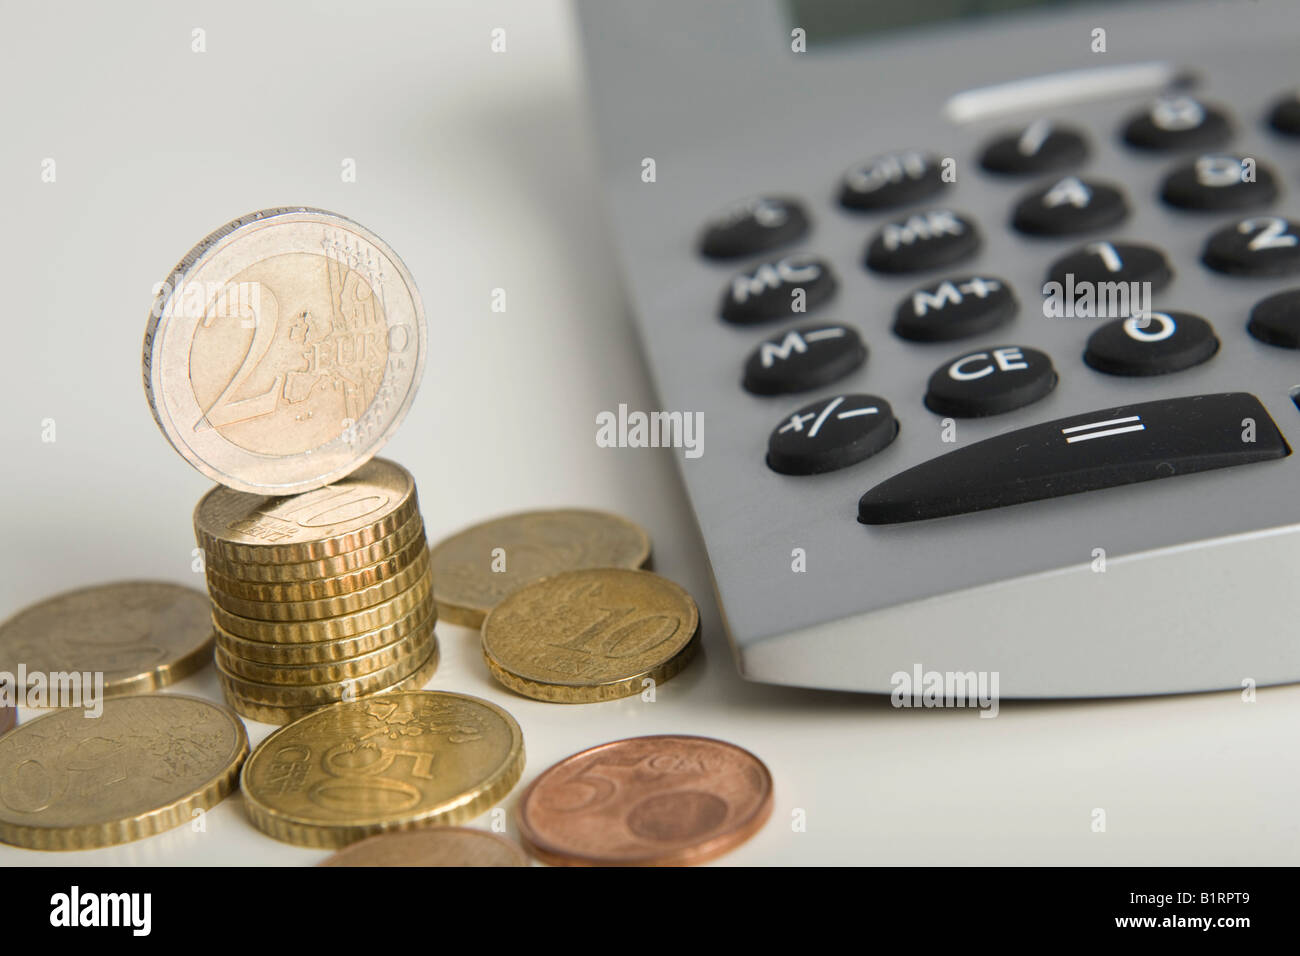 Stacked Euro coins next to a calculator Stock Photo